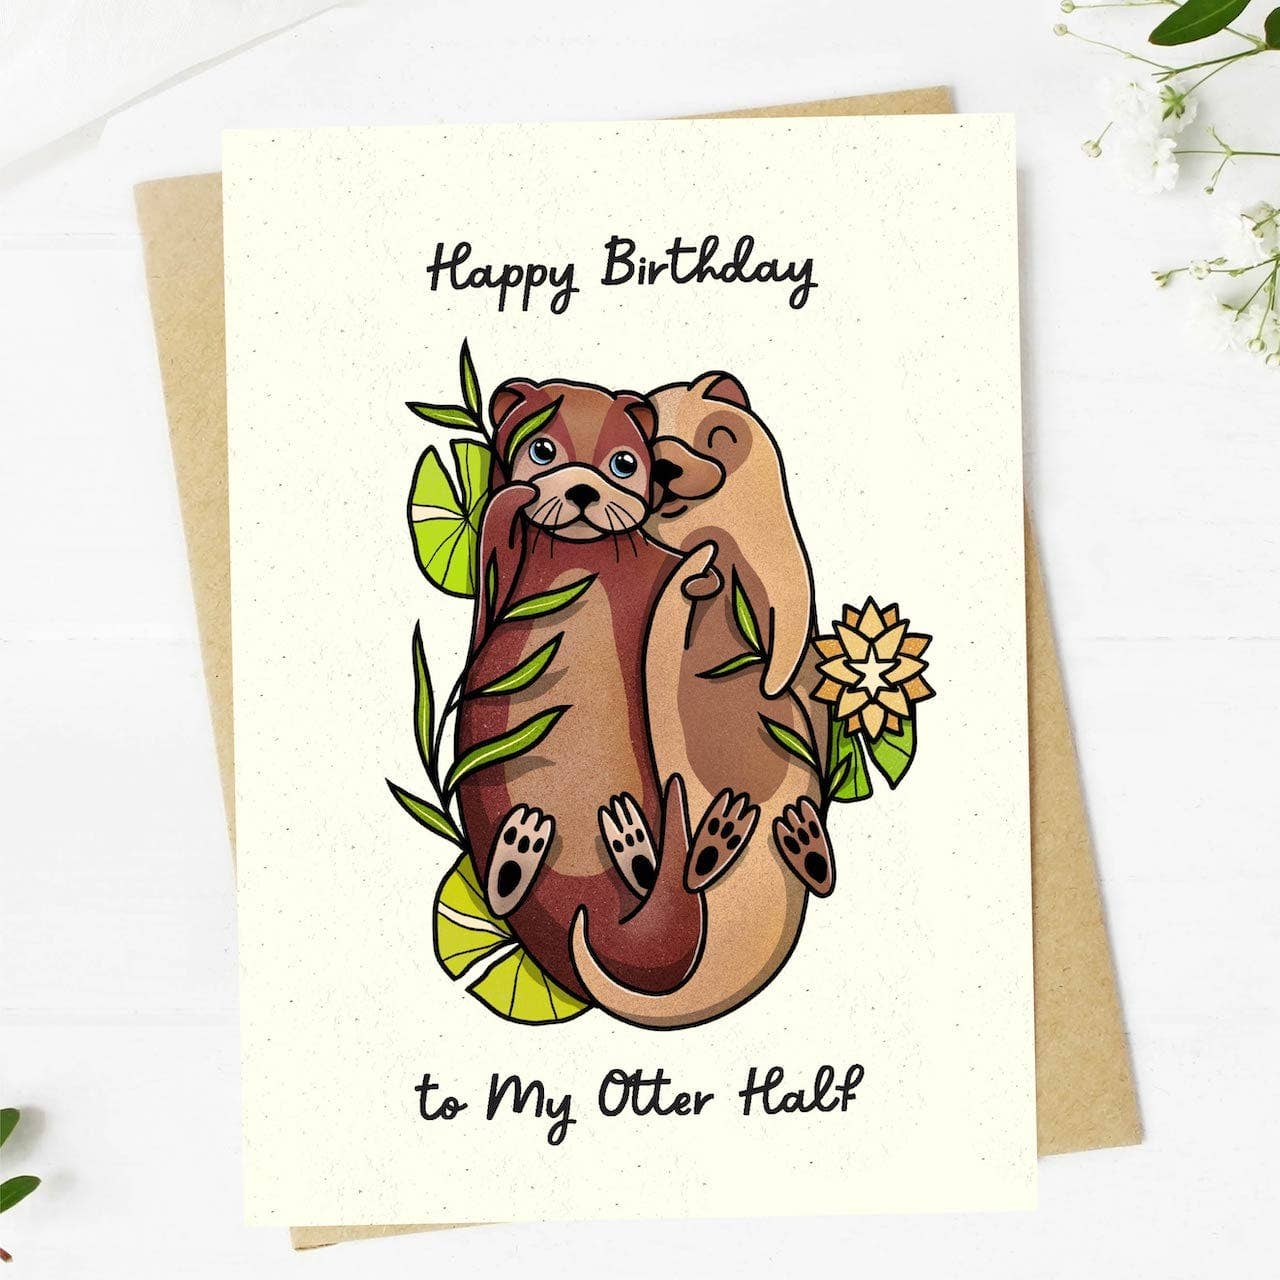 "Happy Birthday to my Otter Half" Birthday Card Pun